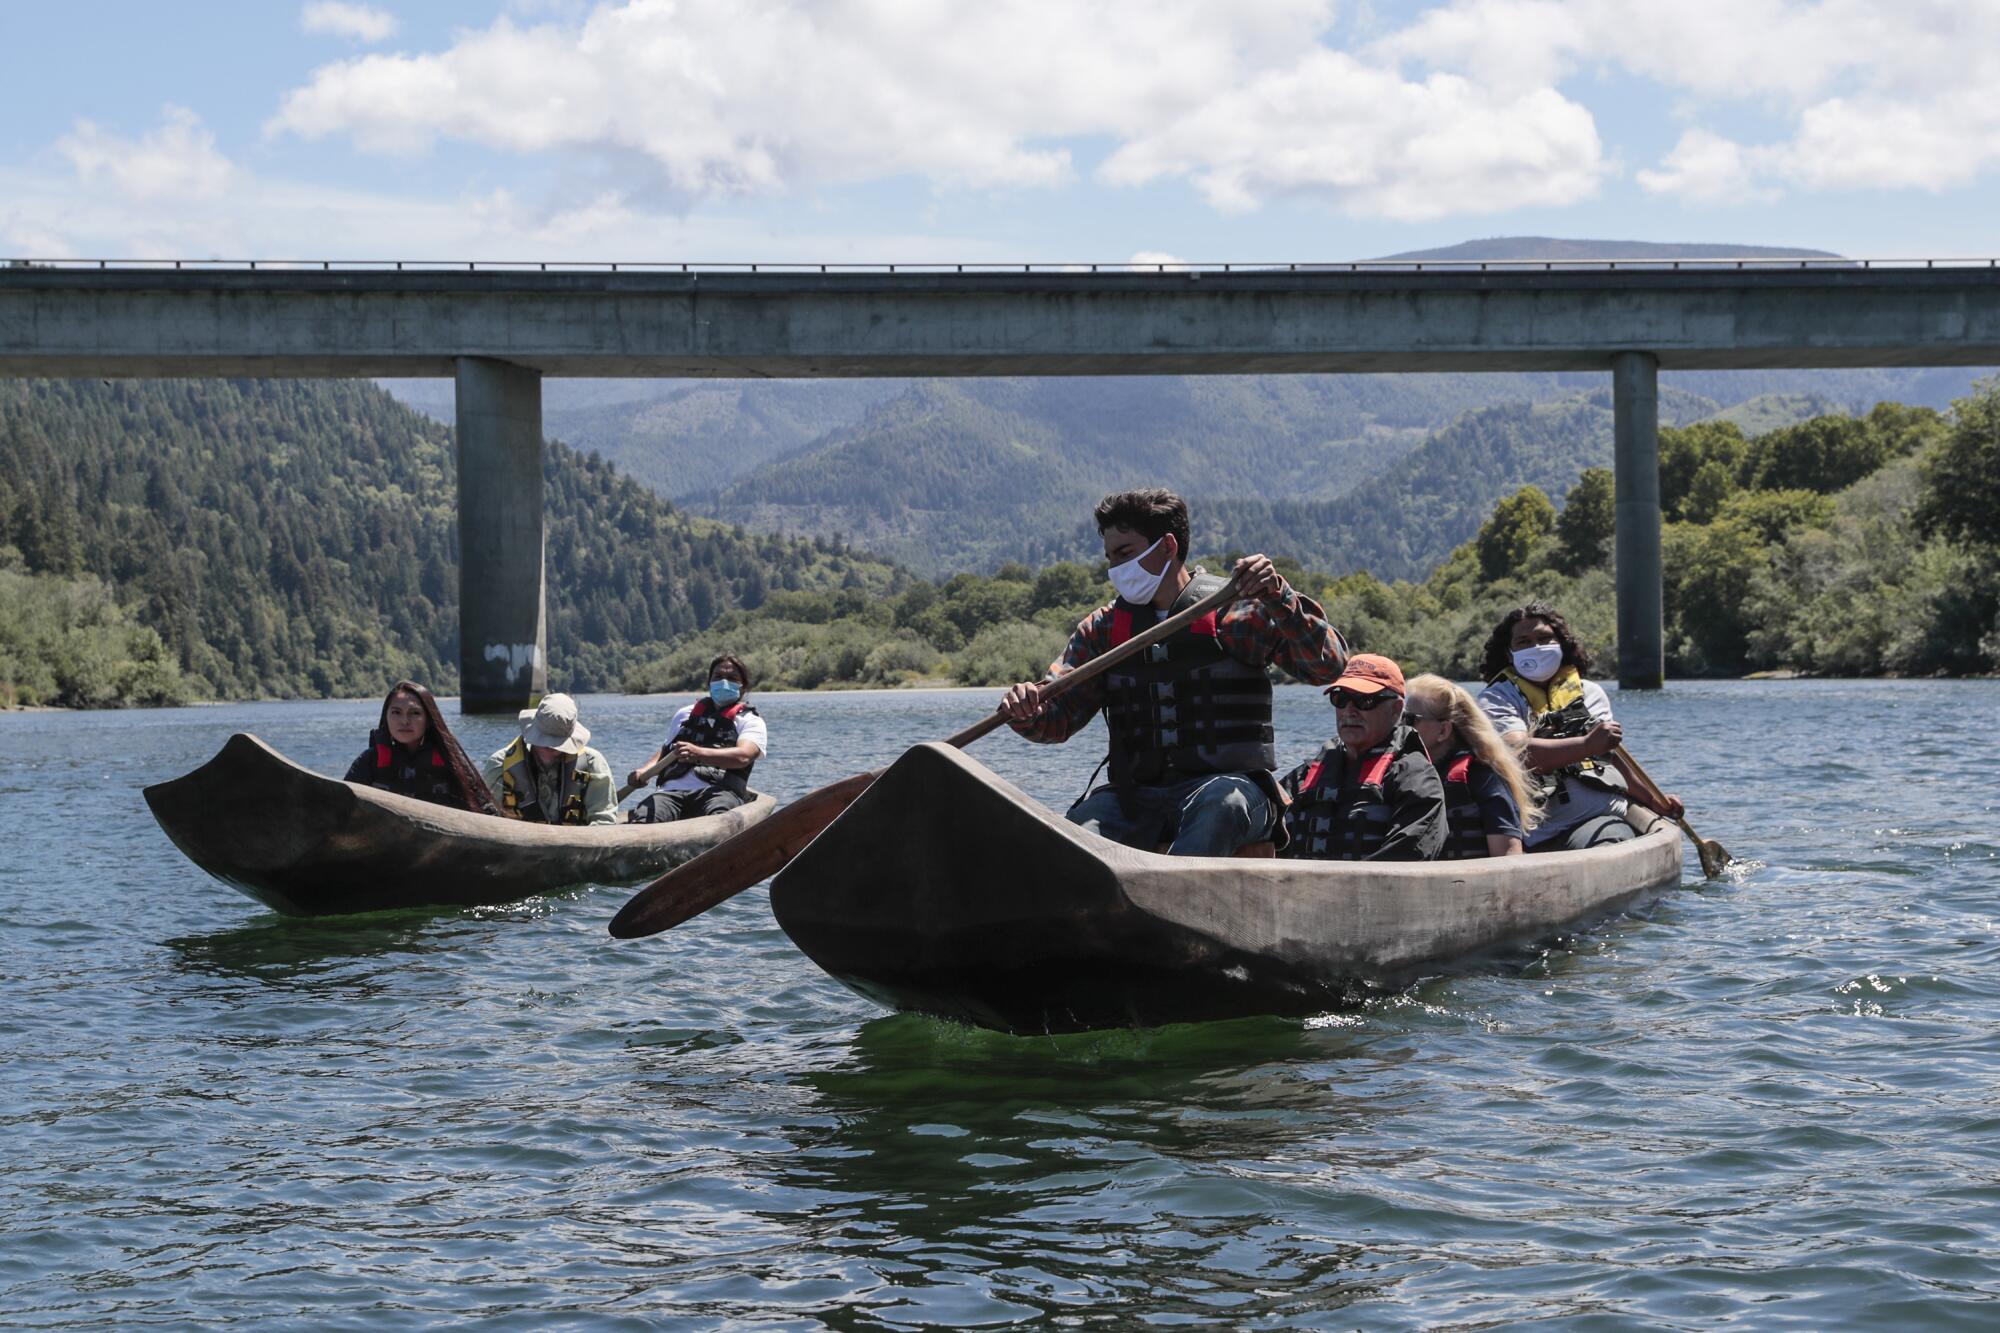 Yurok guides paddle tourists along the Klamath River.